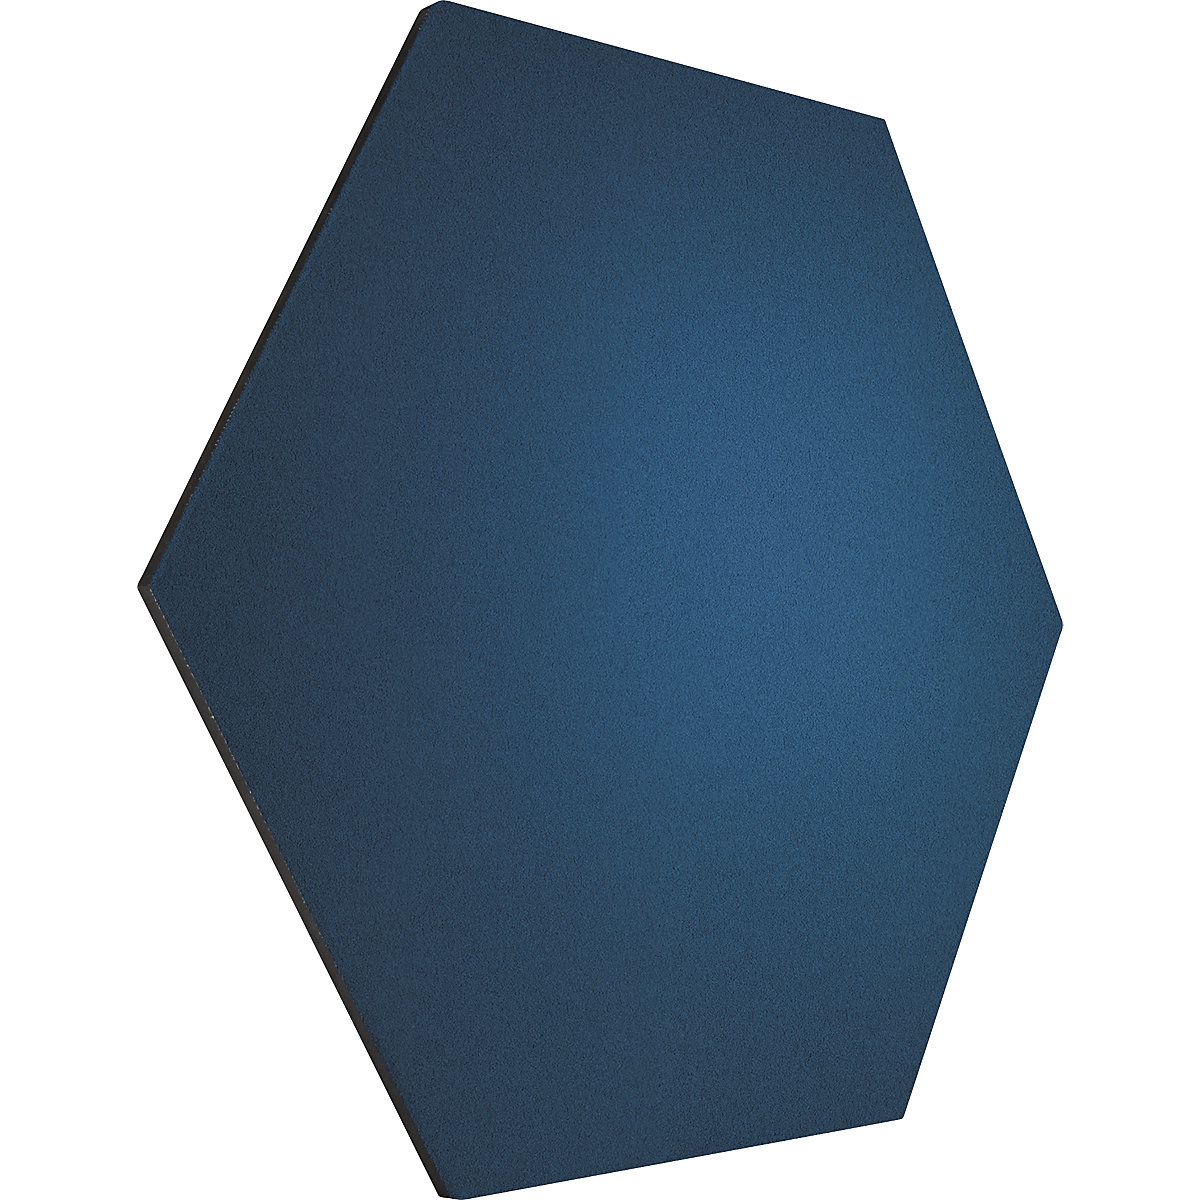 Design prikbord zeshoekig – Chameleon, kurk, b x h = 600 x 600 mm, donkerblauw-27